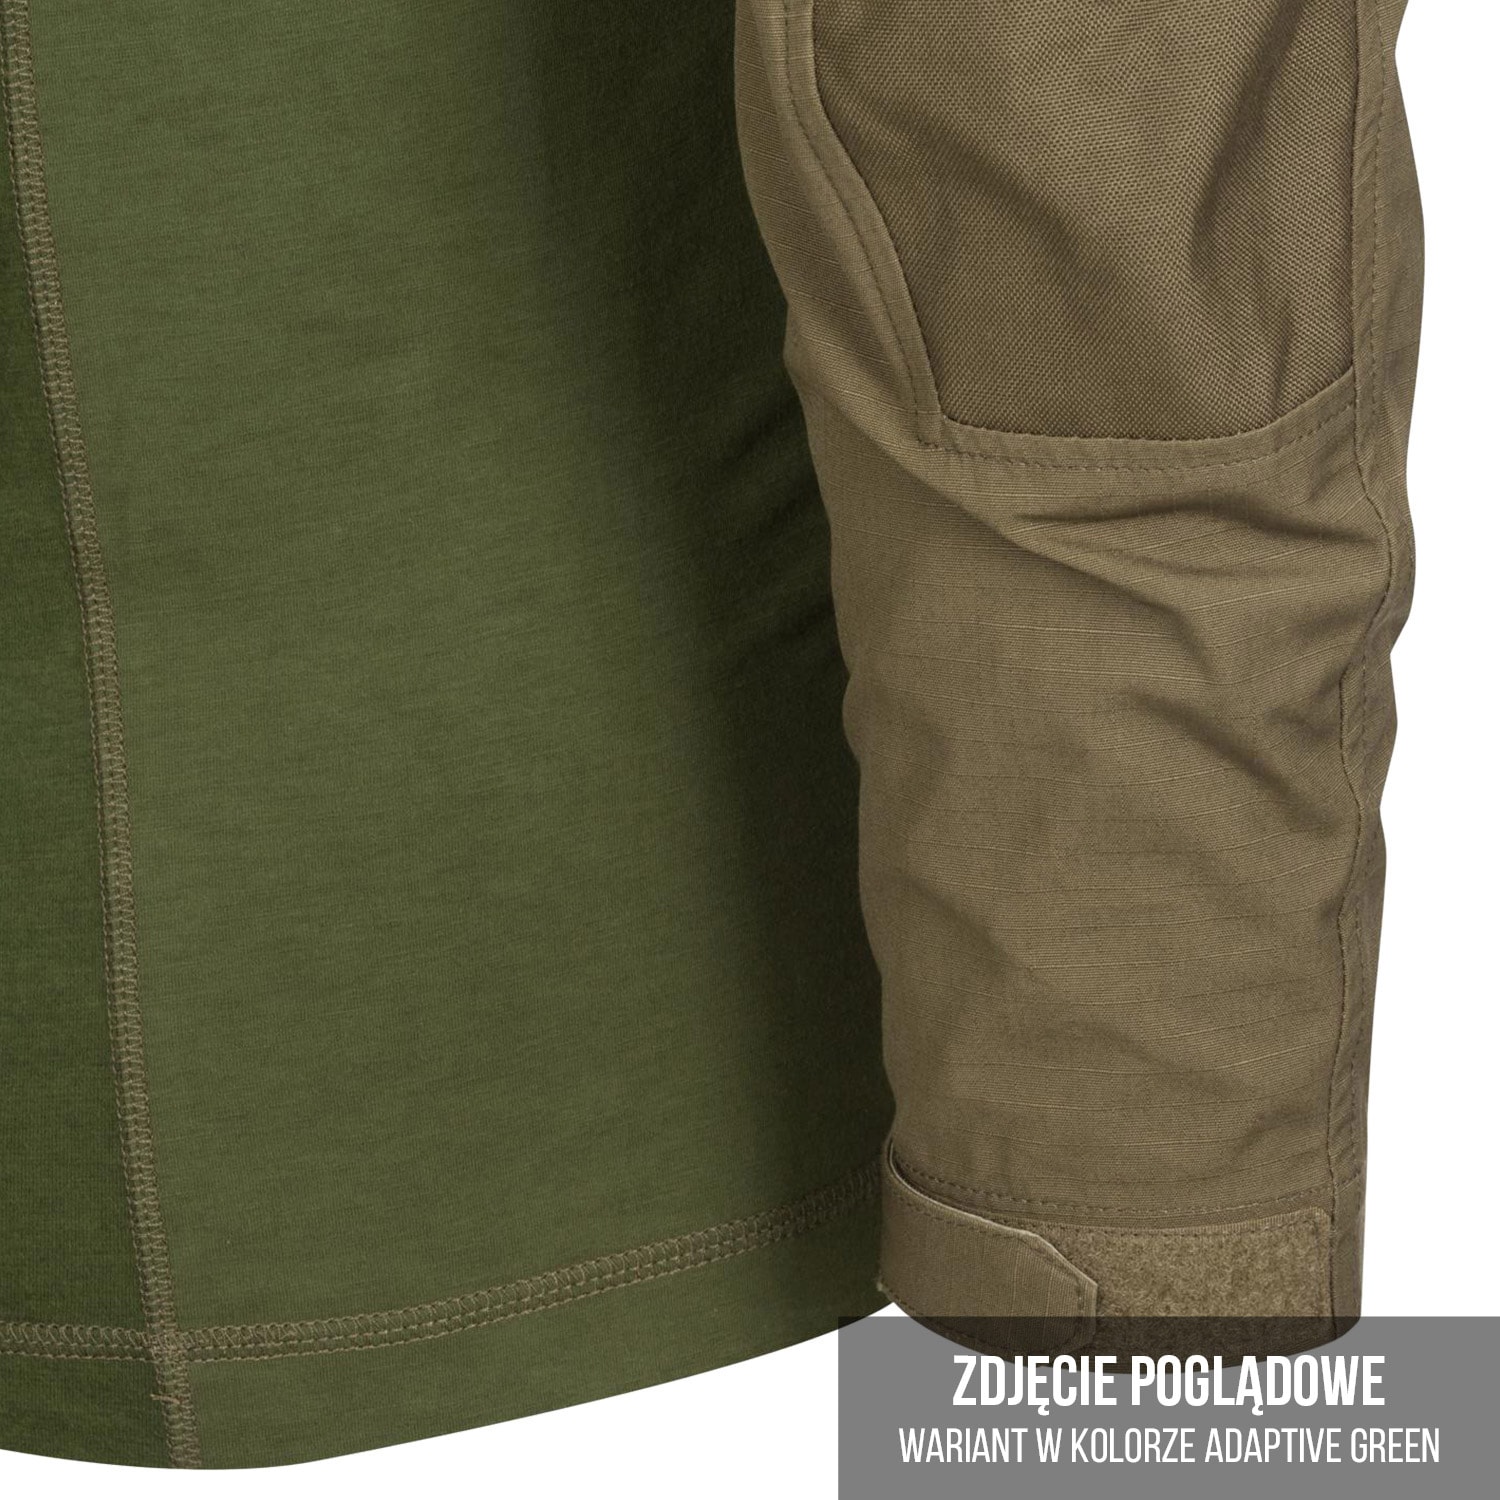 Bluza Direct Action Combat Shirt Vanguard - MultiCam 